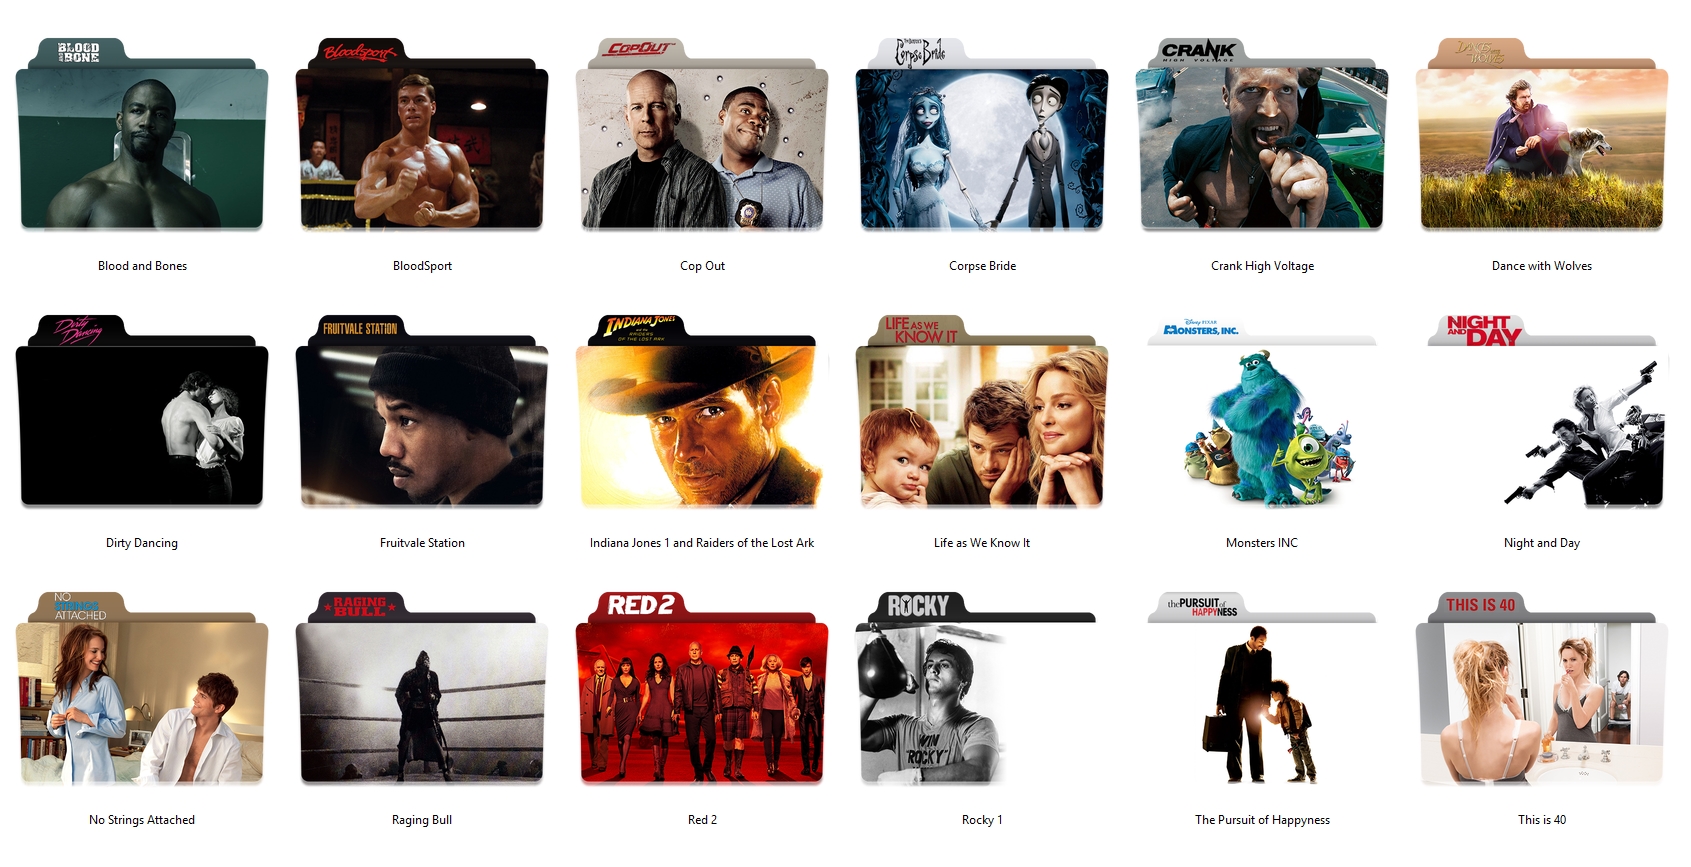 12 Rounds 2 - Reloaded 2013 Movie Folder by mohamed7799 on DeviantArt